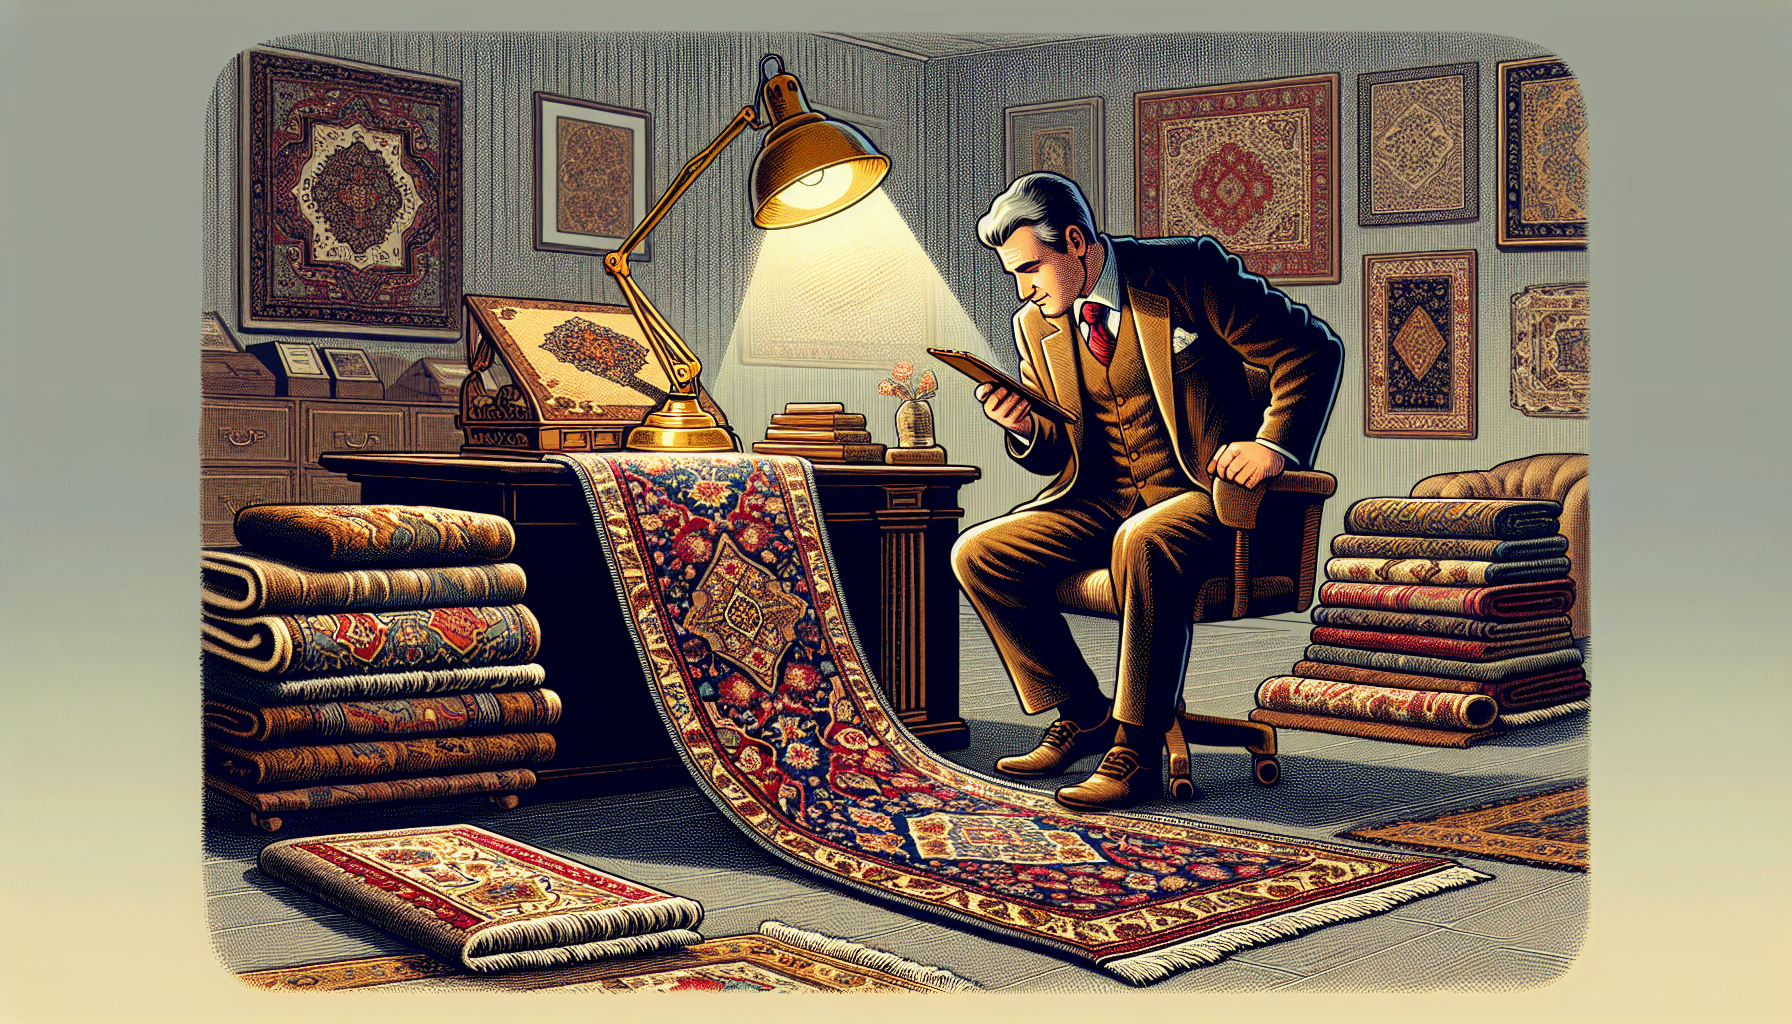 Illustration of reputable dealer inspecting persian rug